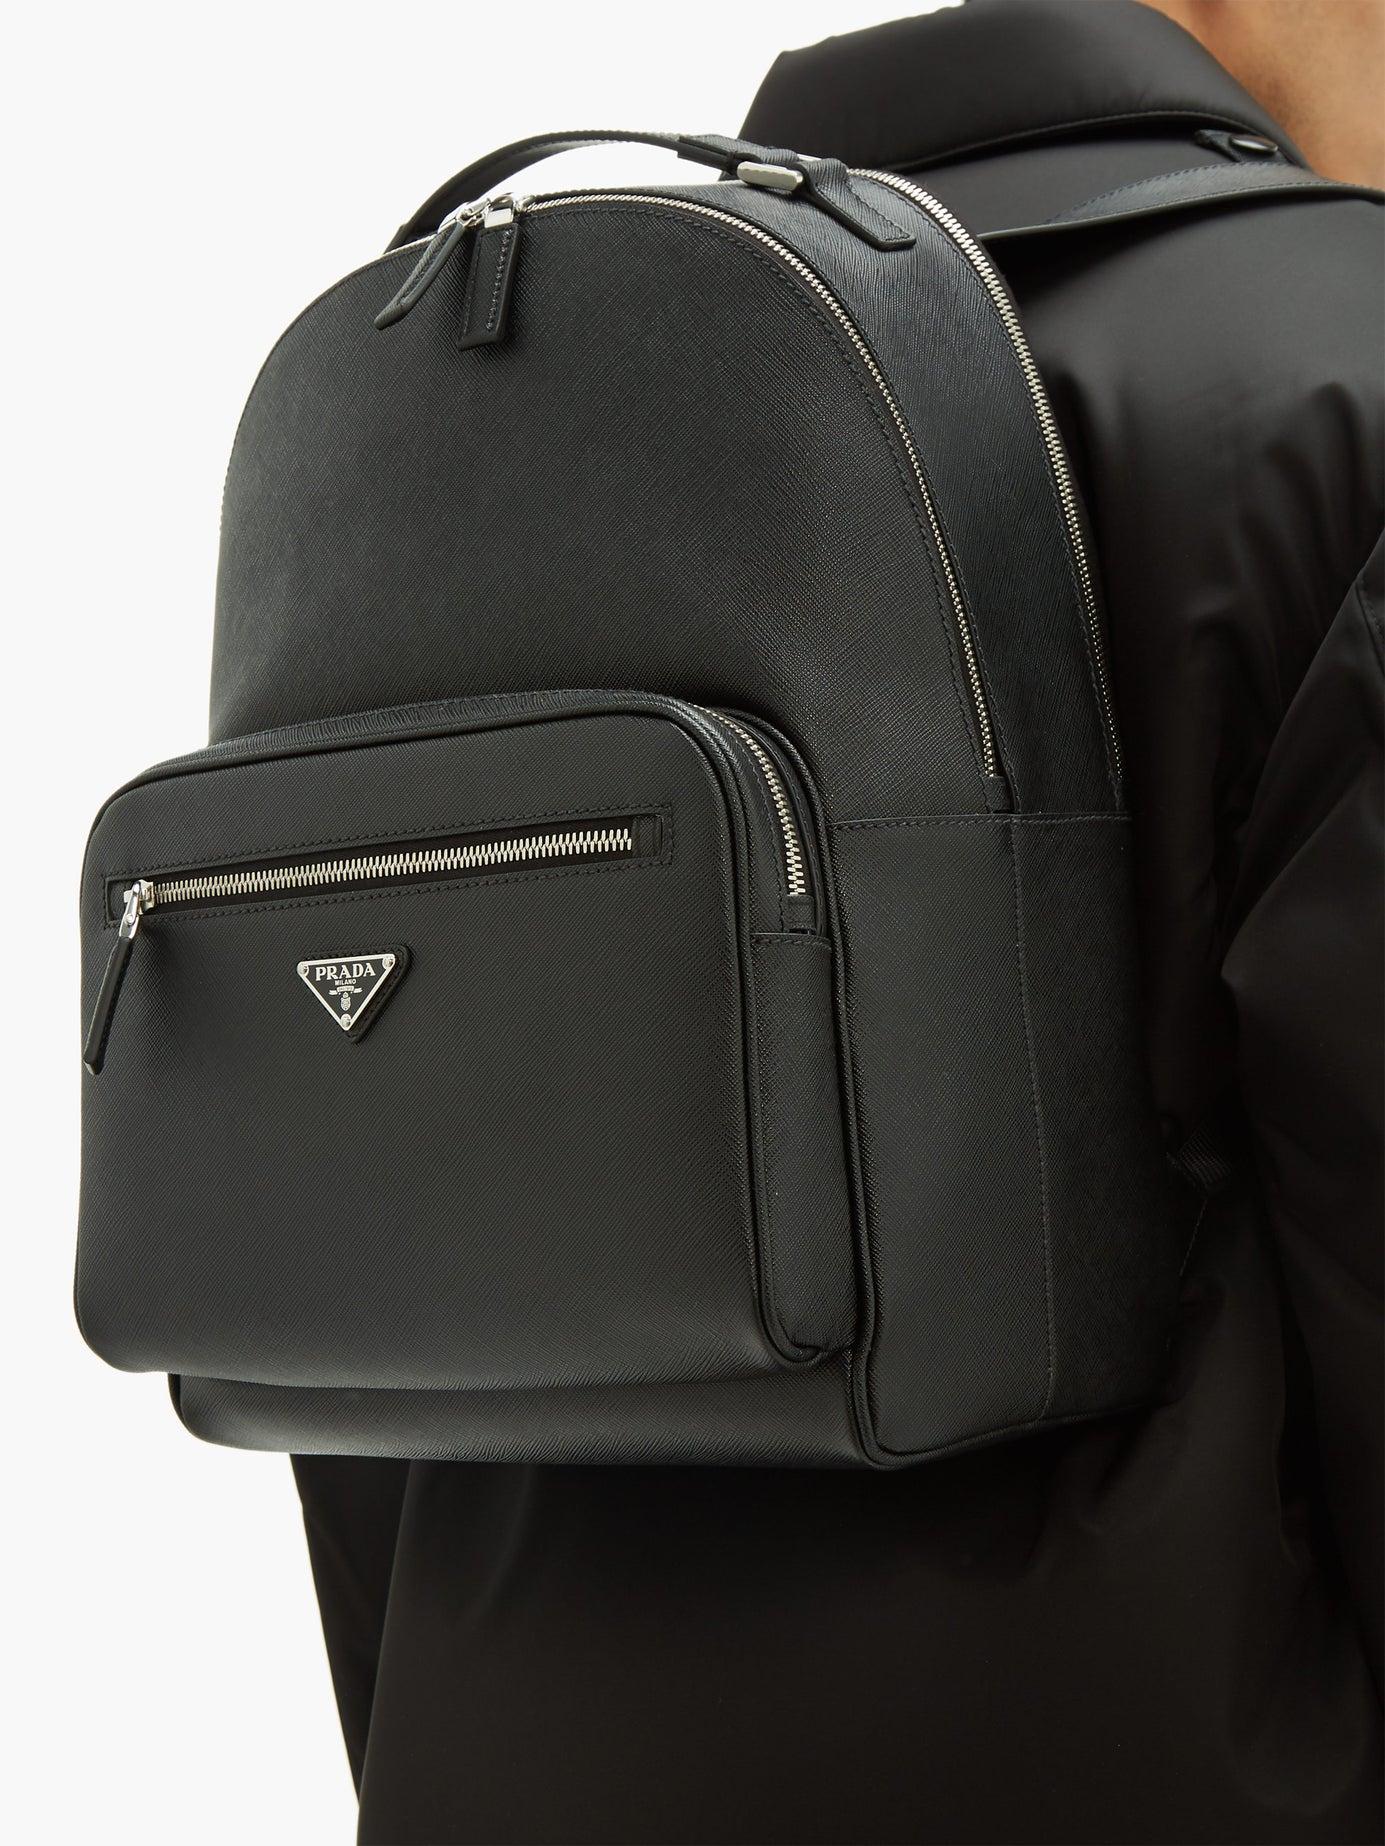 Prada Leather Backpack in Black